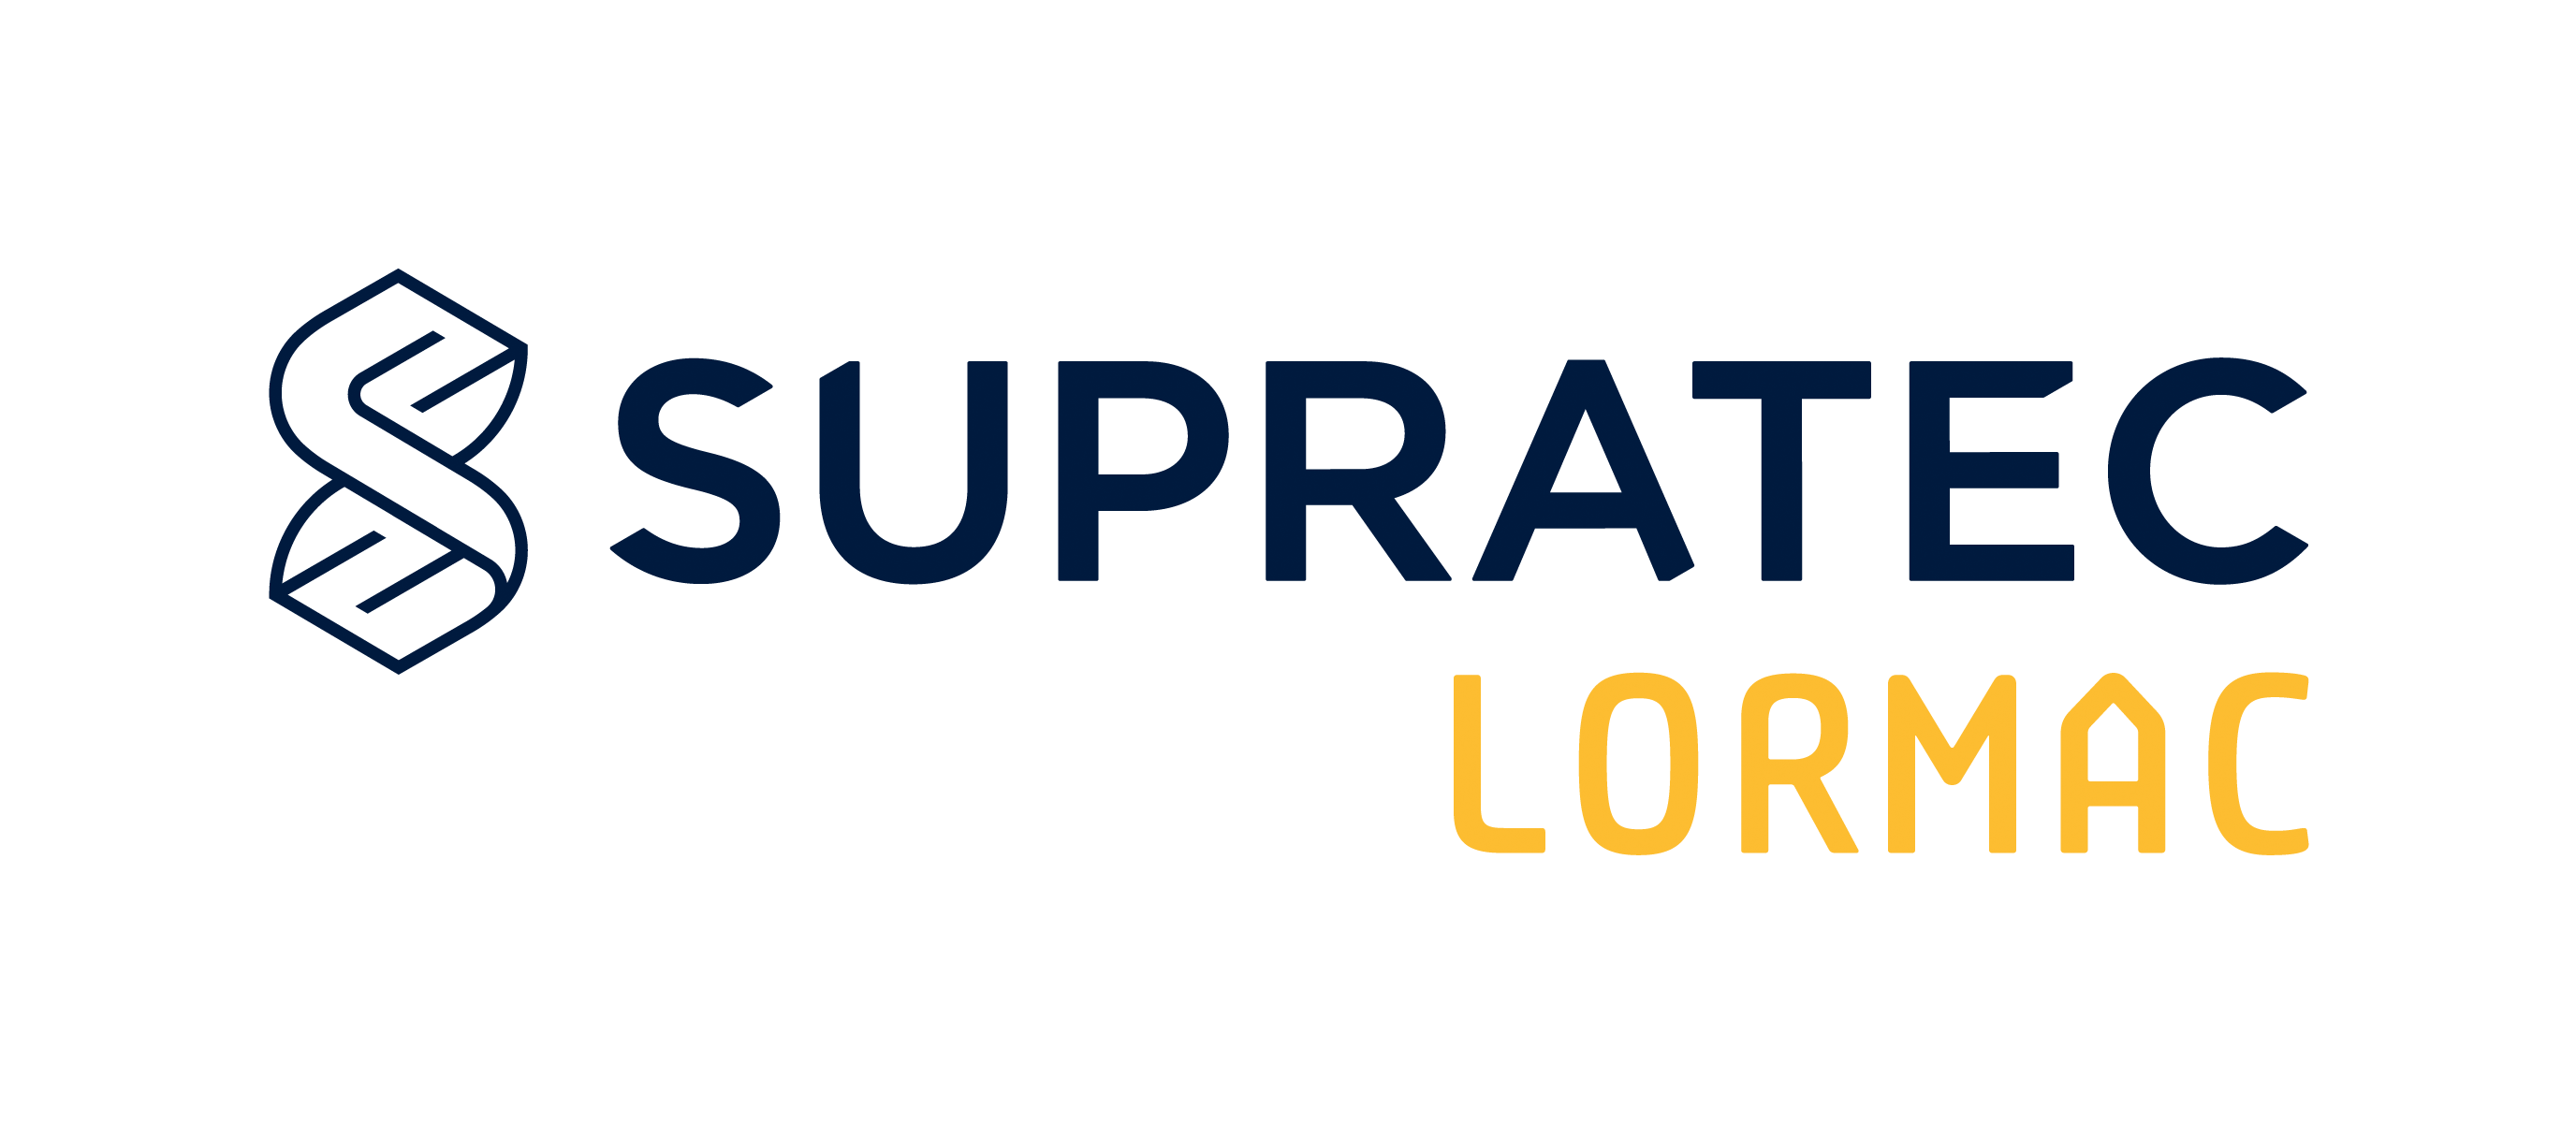 the brand SUPRATEC Lormac